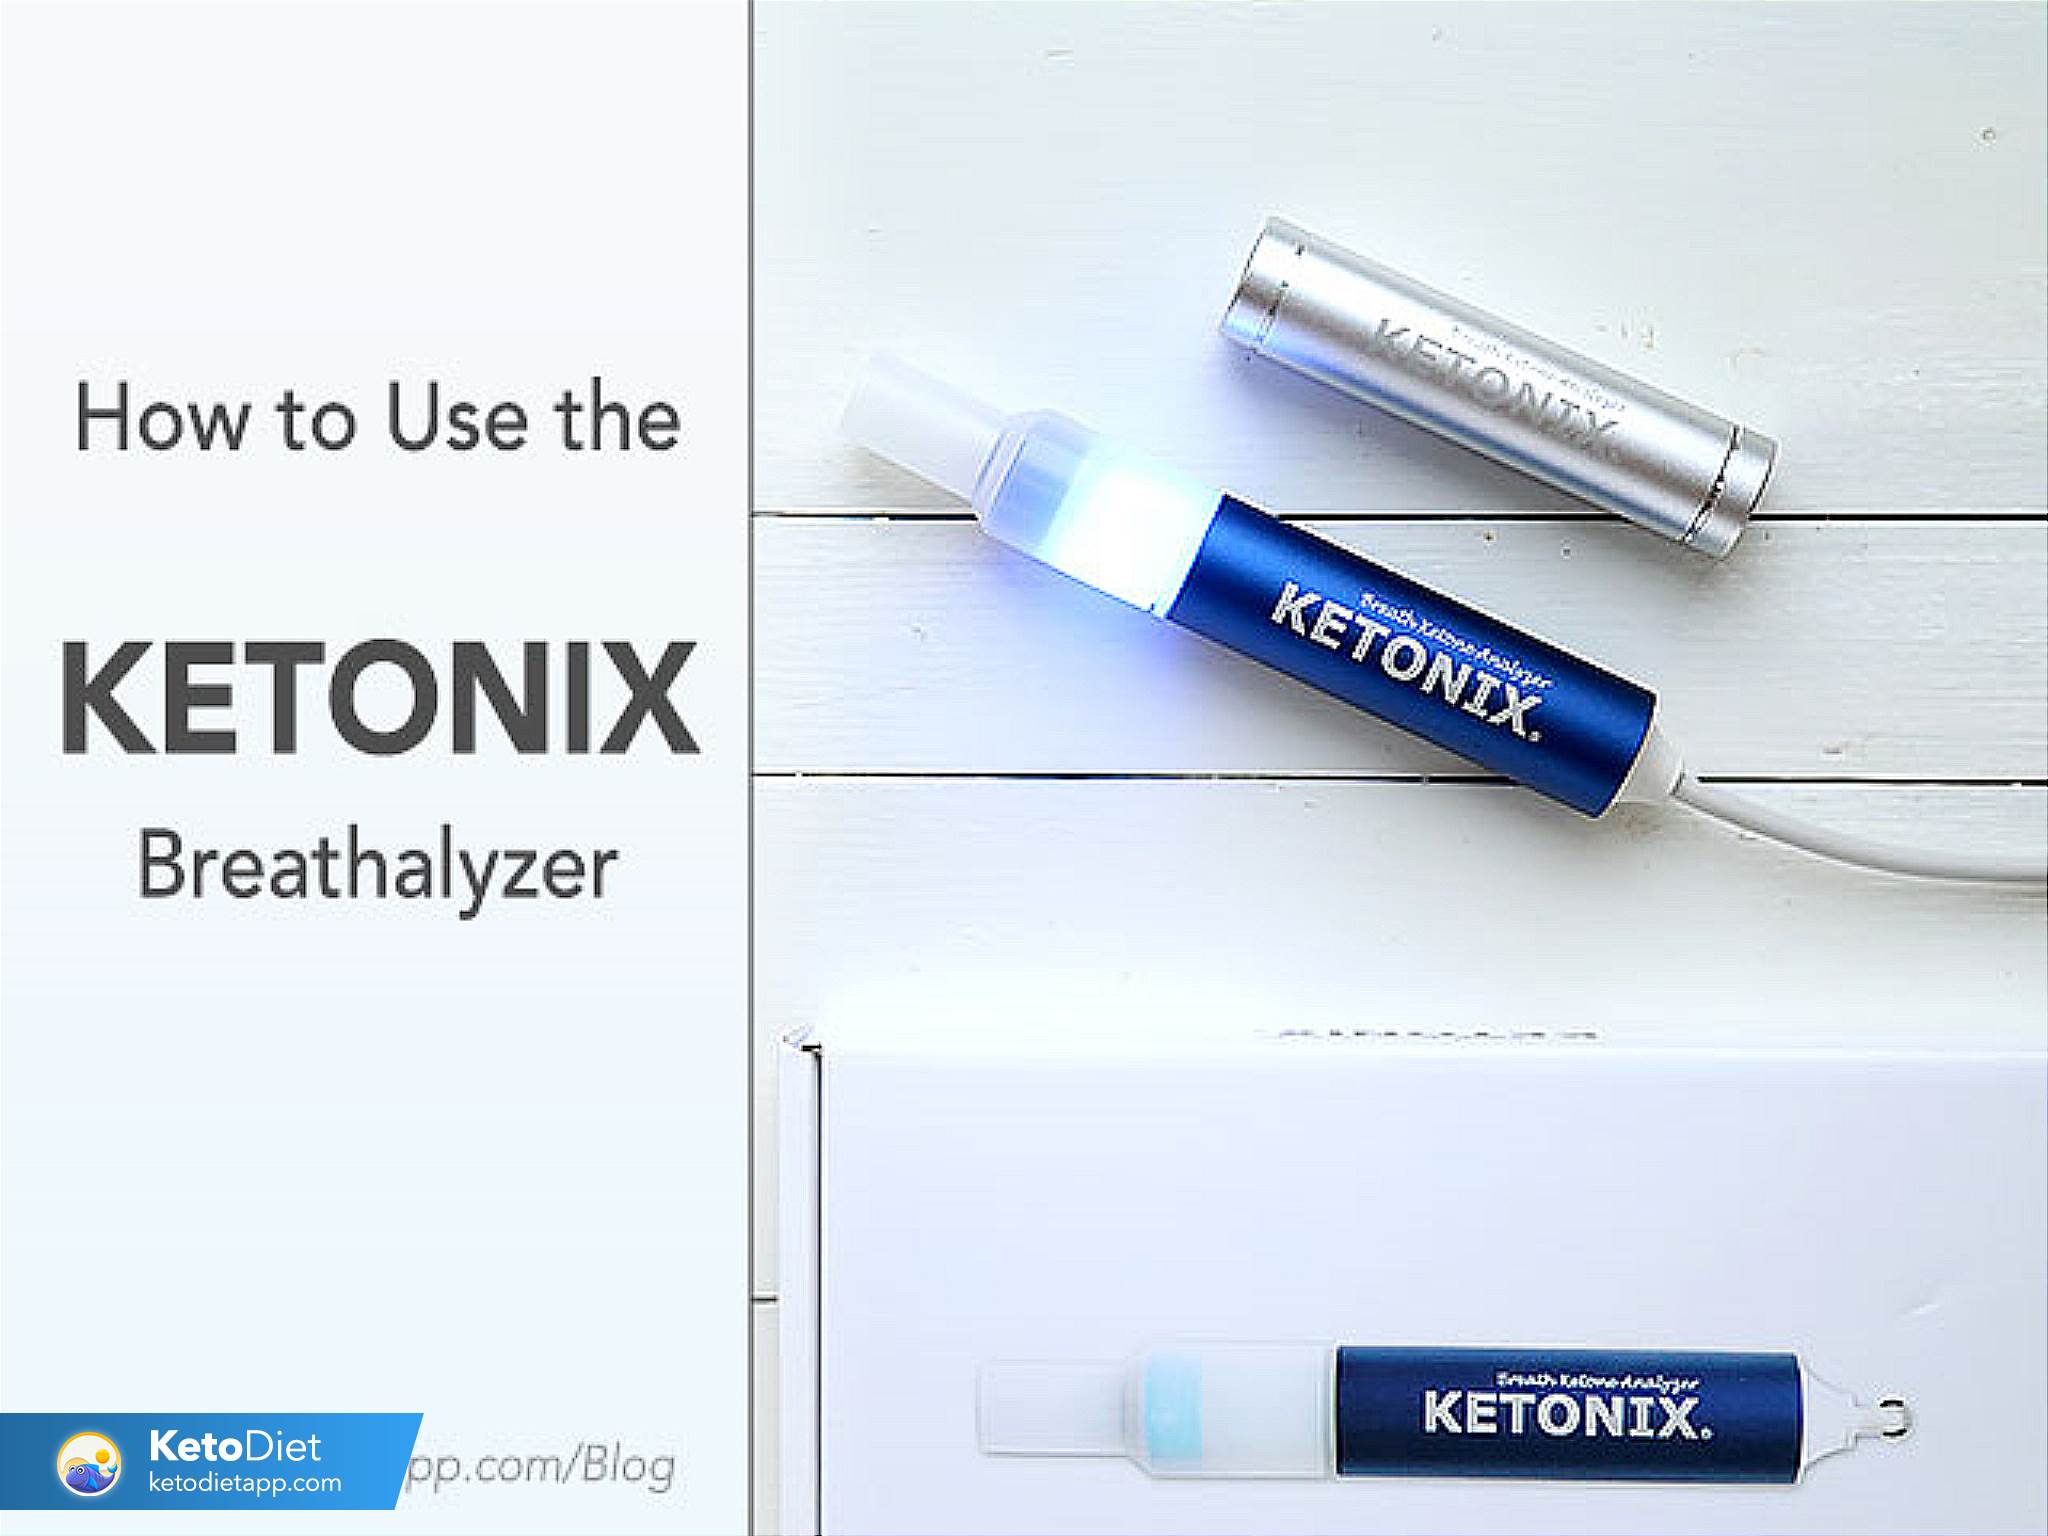 How To Use the Ketonix Breathalyzer